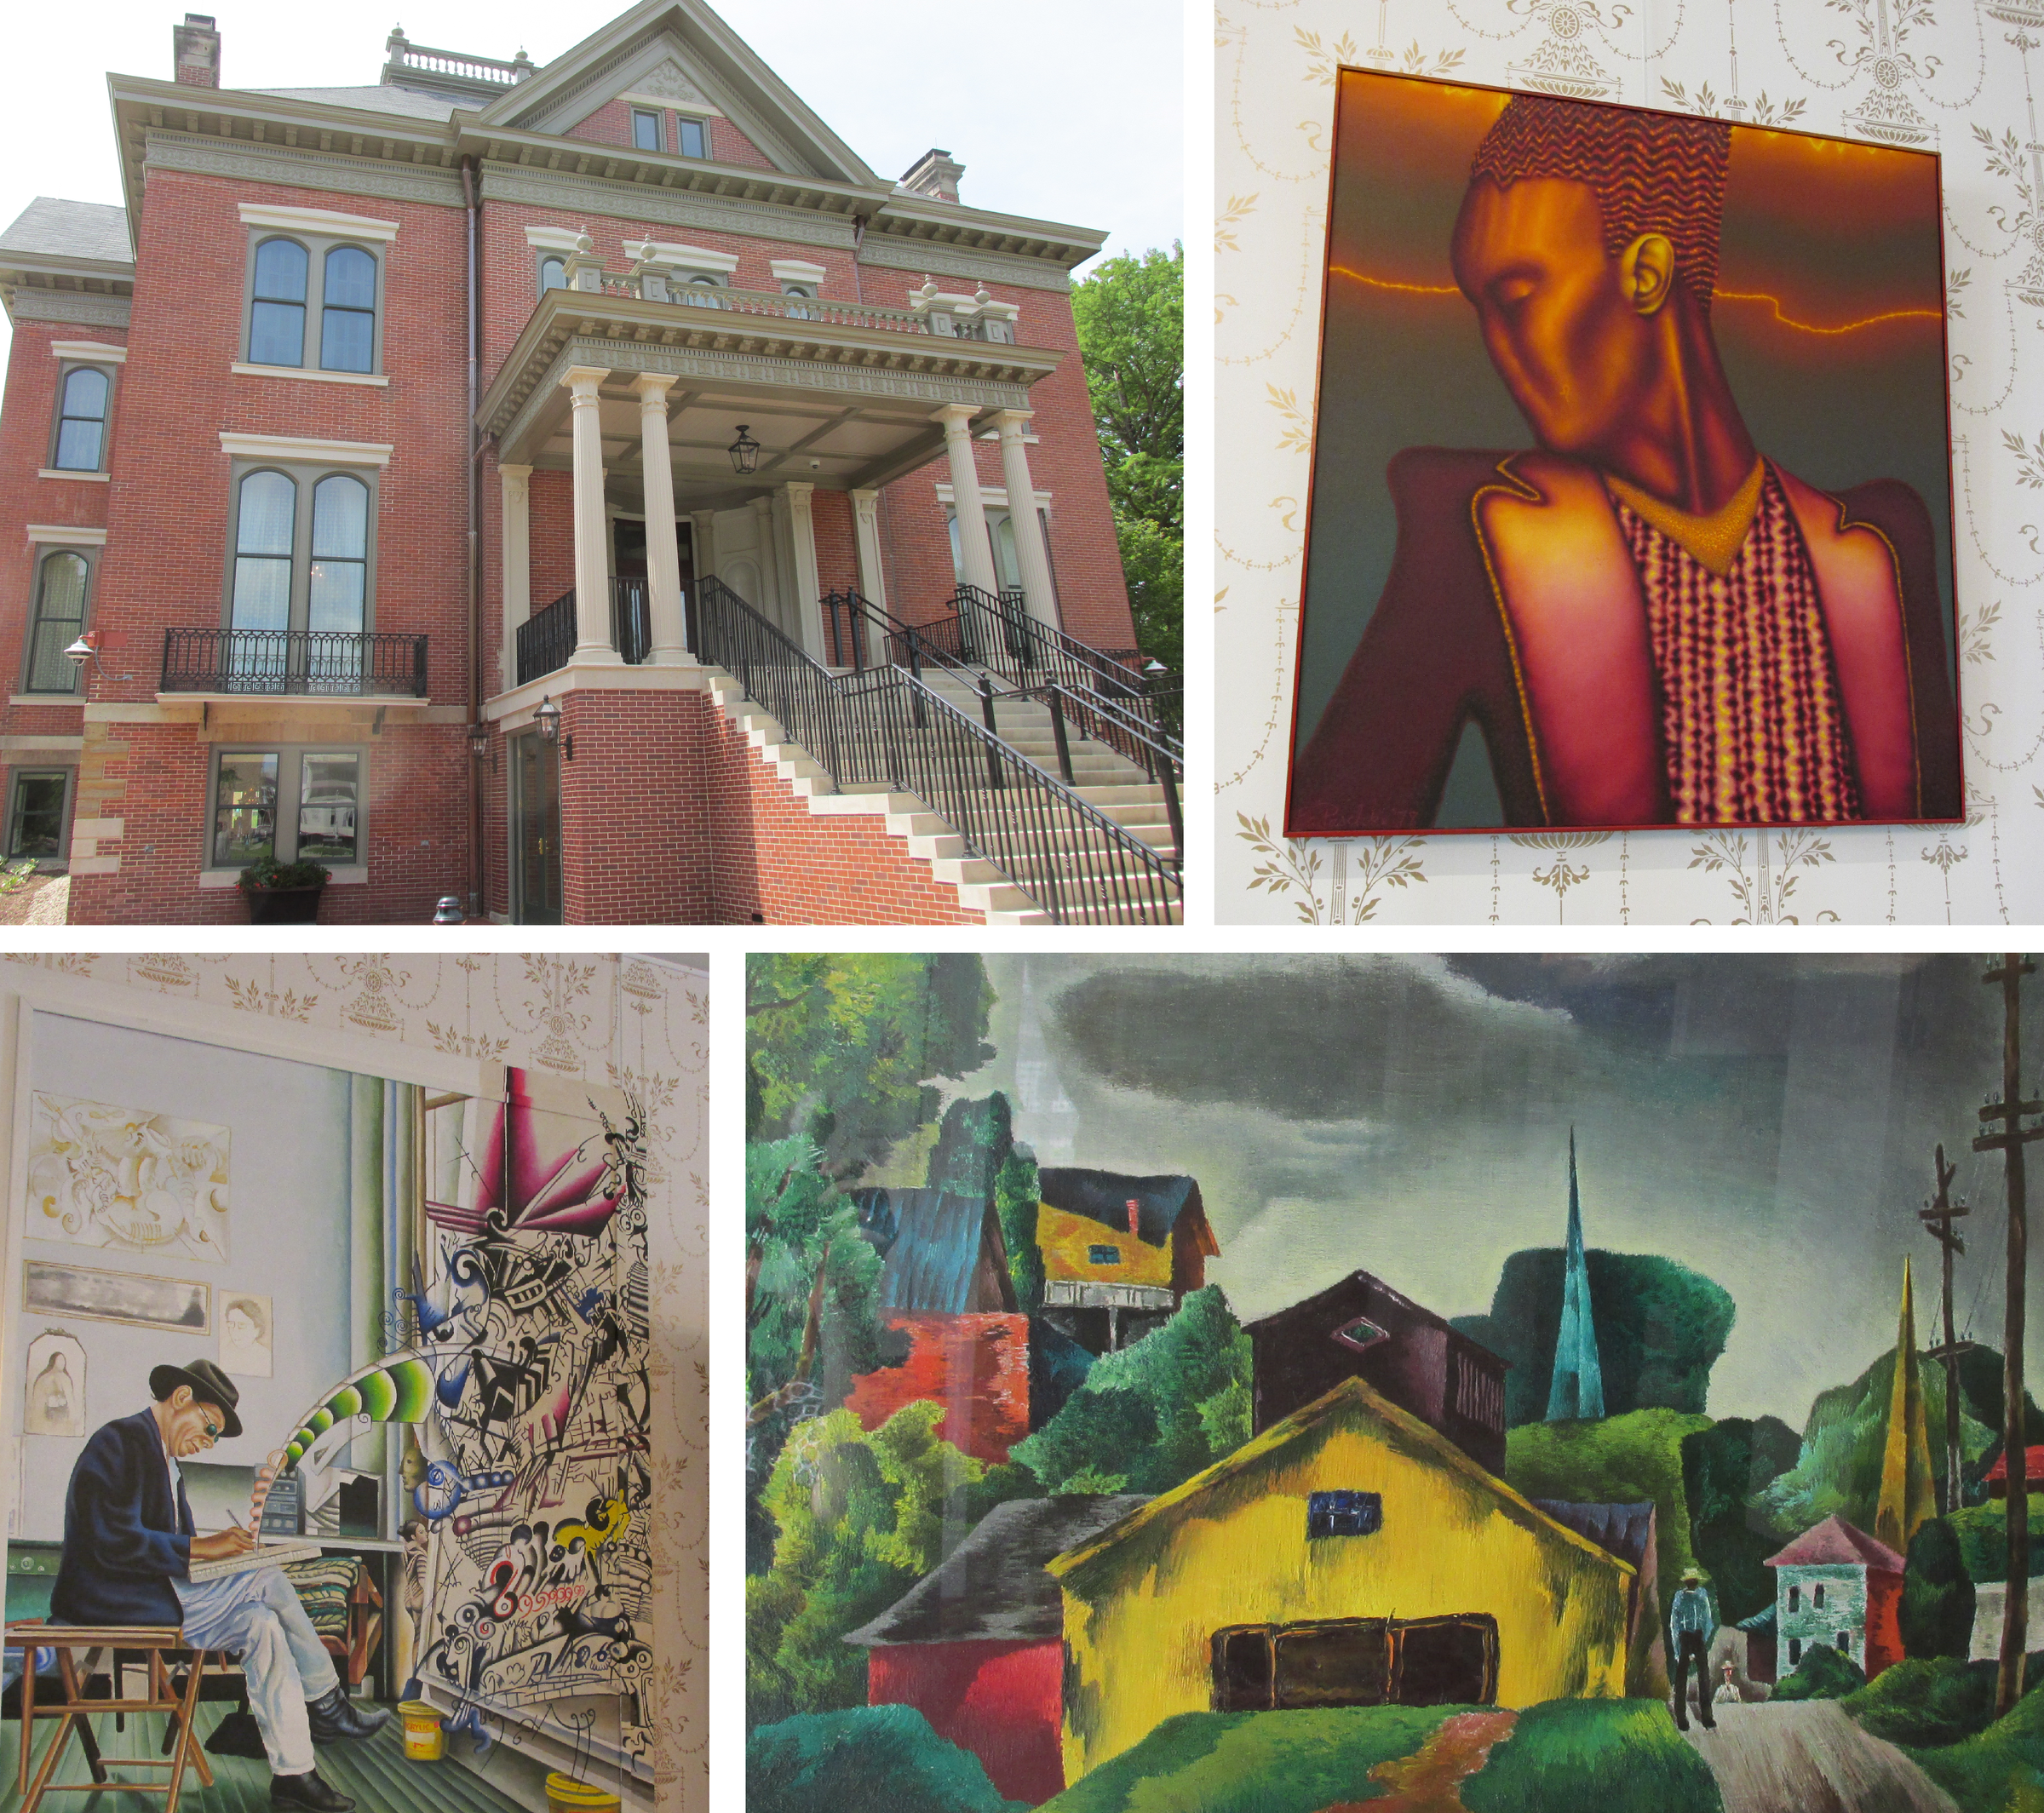 Newly renovated mansion + artwork on display (descriptions & more artwork in slide show.)